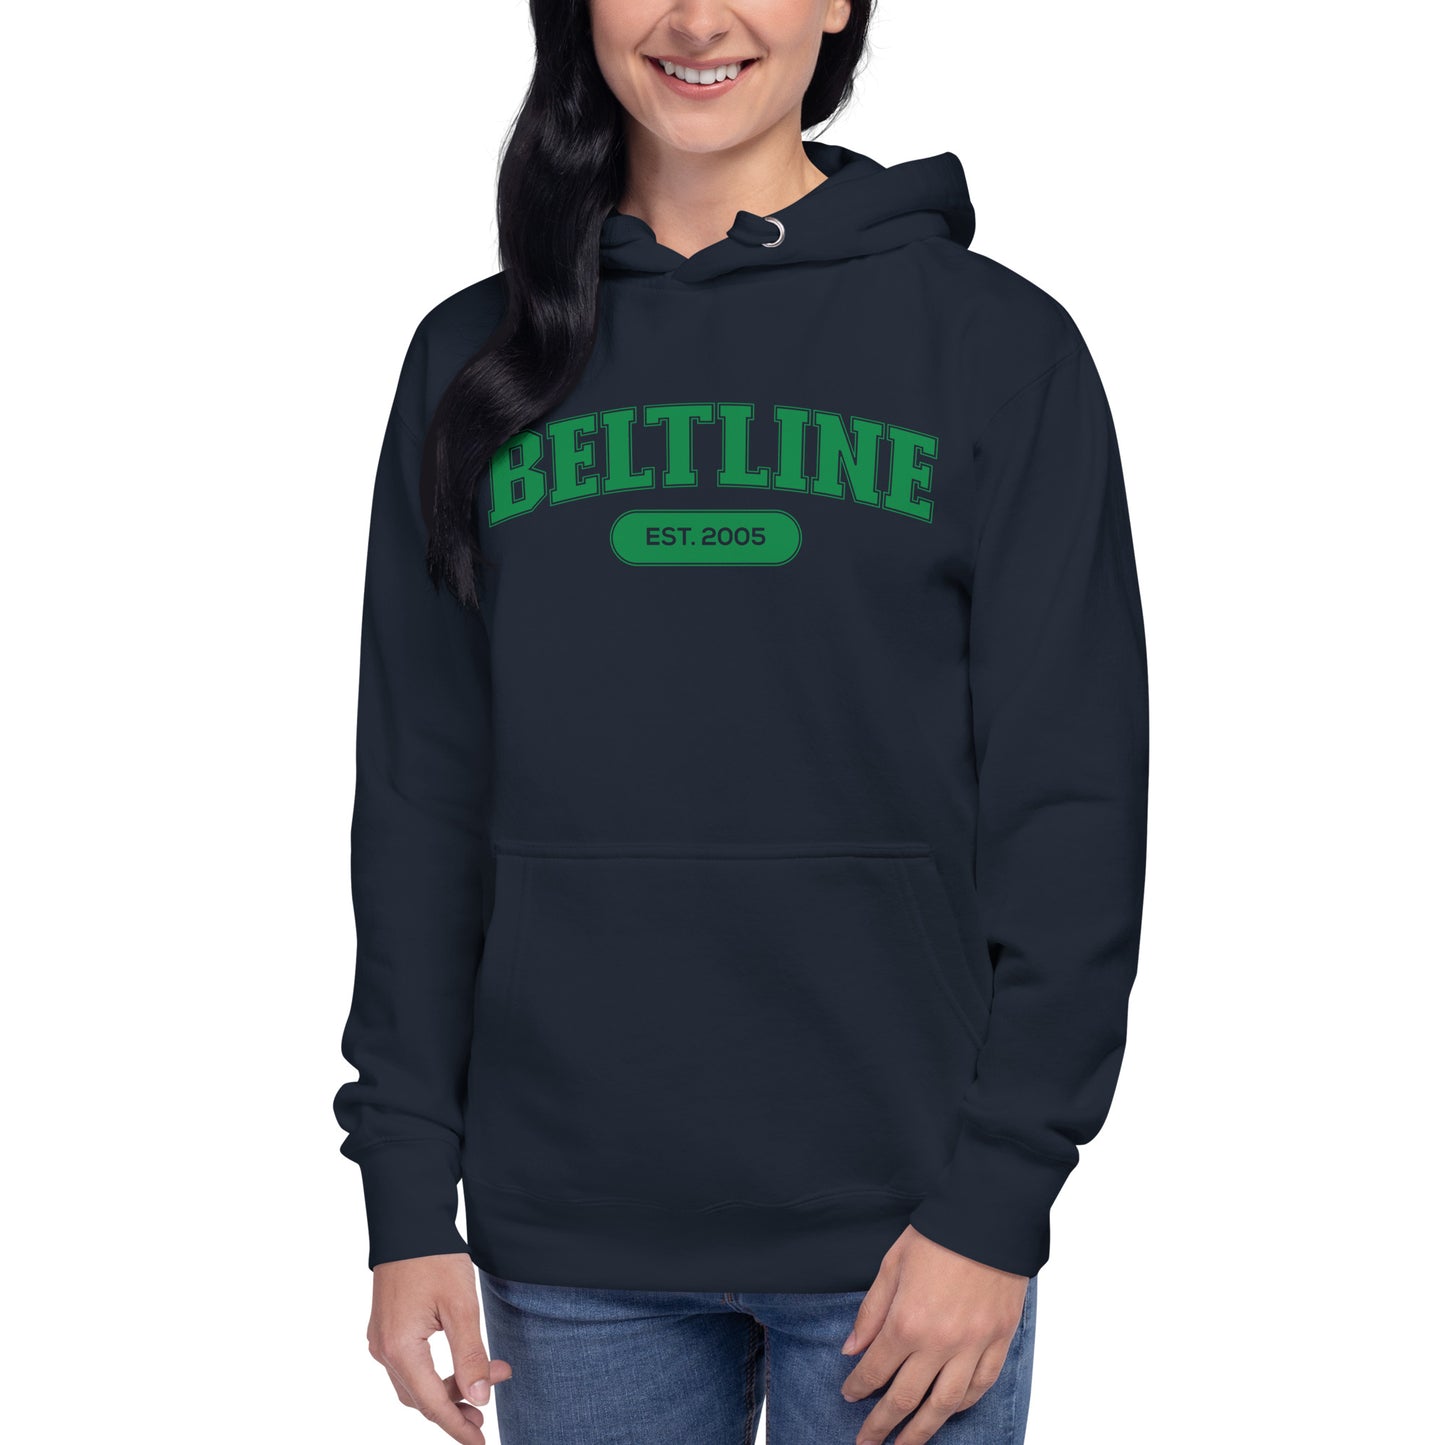 BeltLine Established Unisex Hoodie